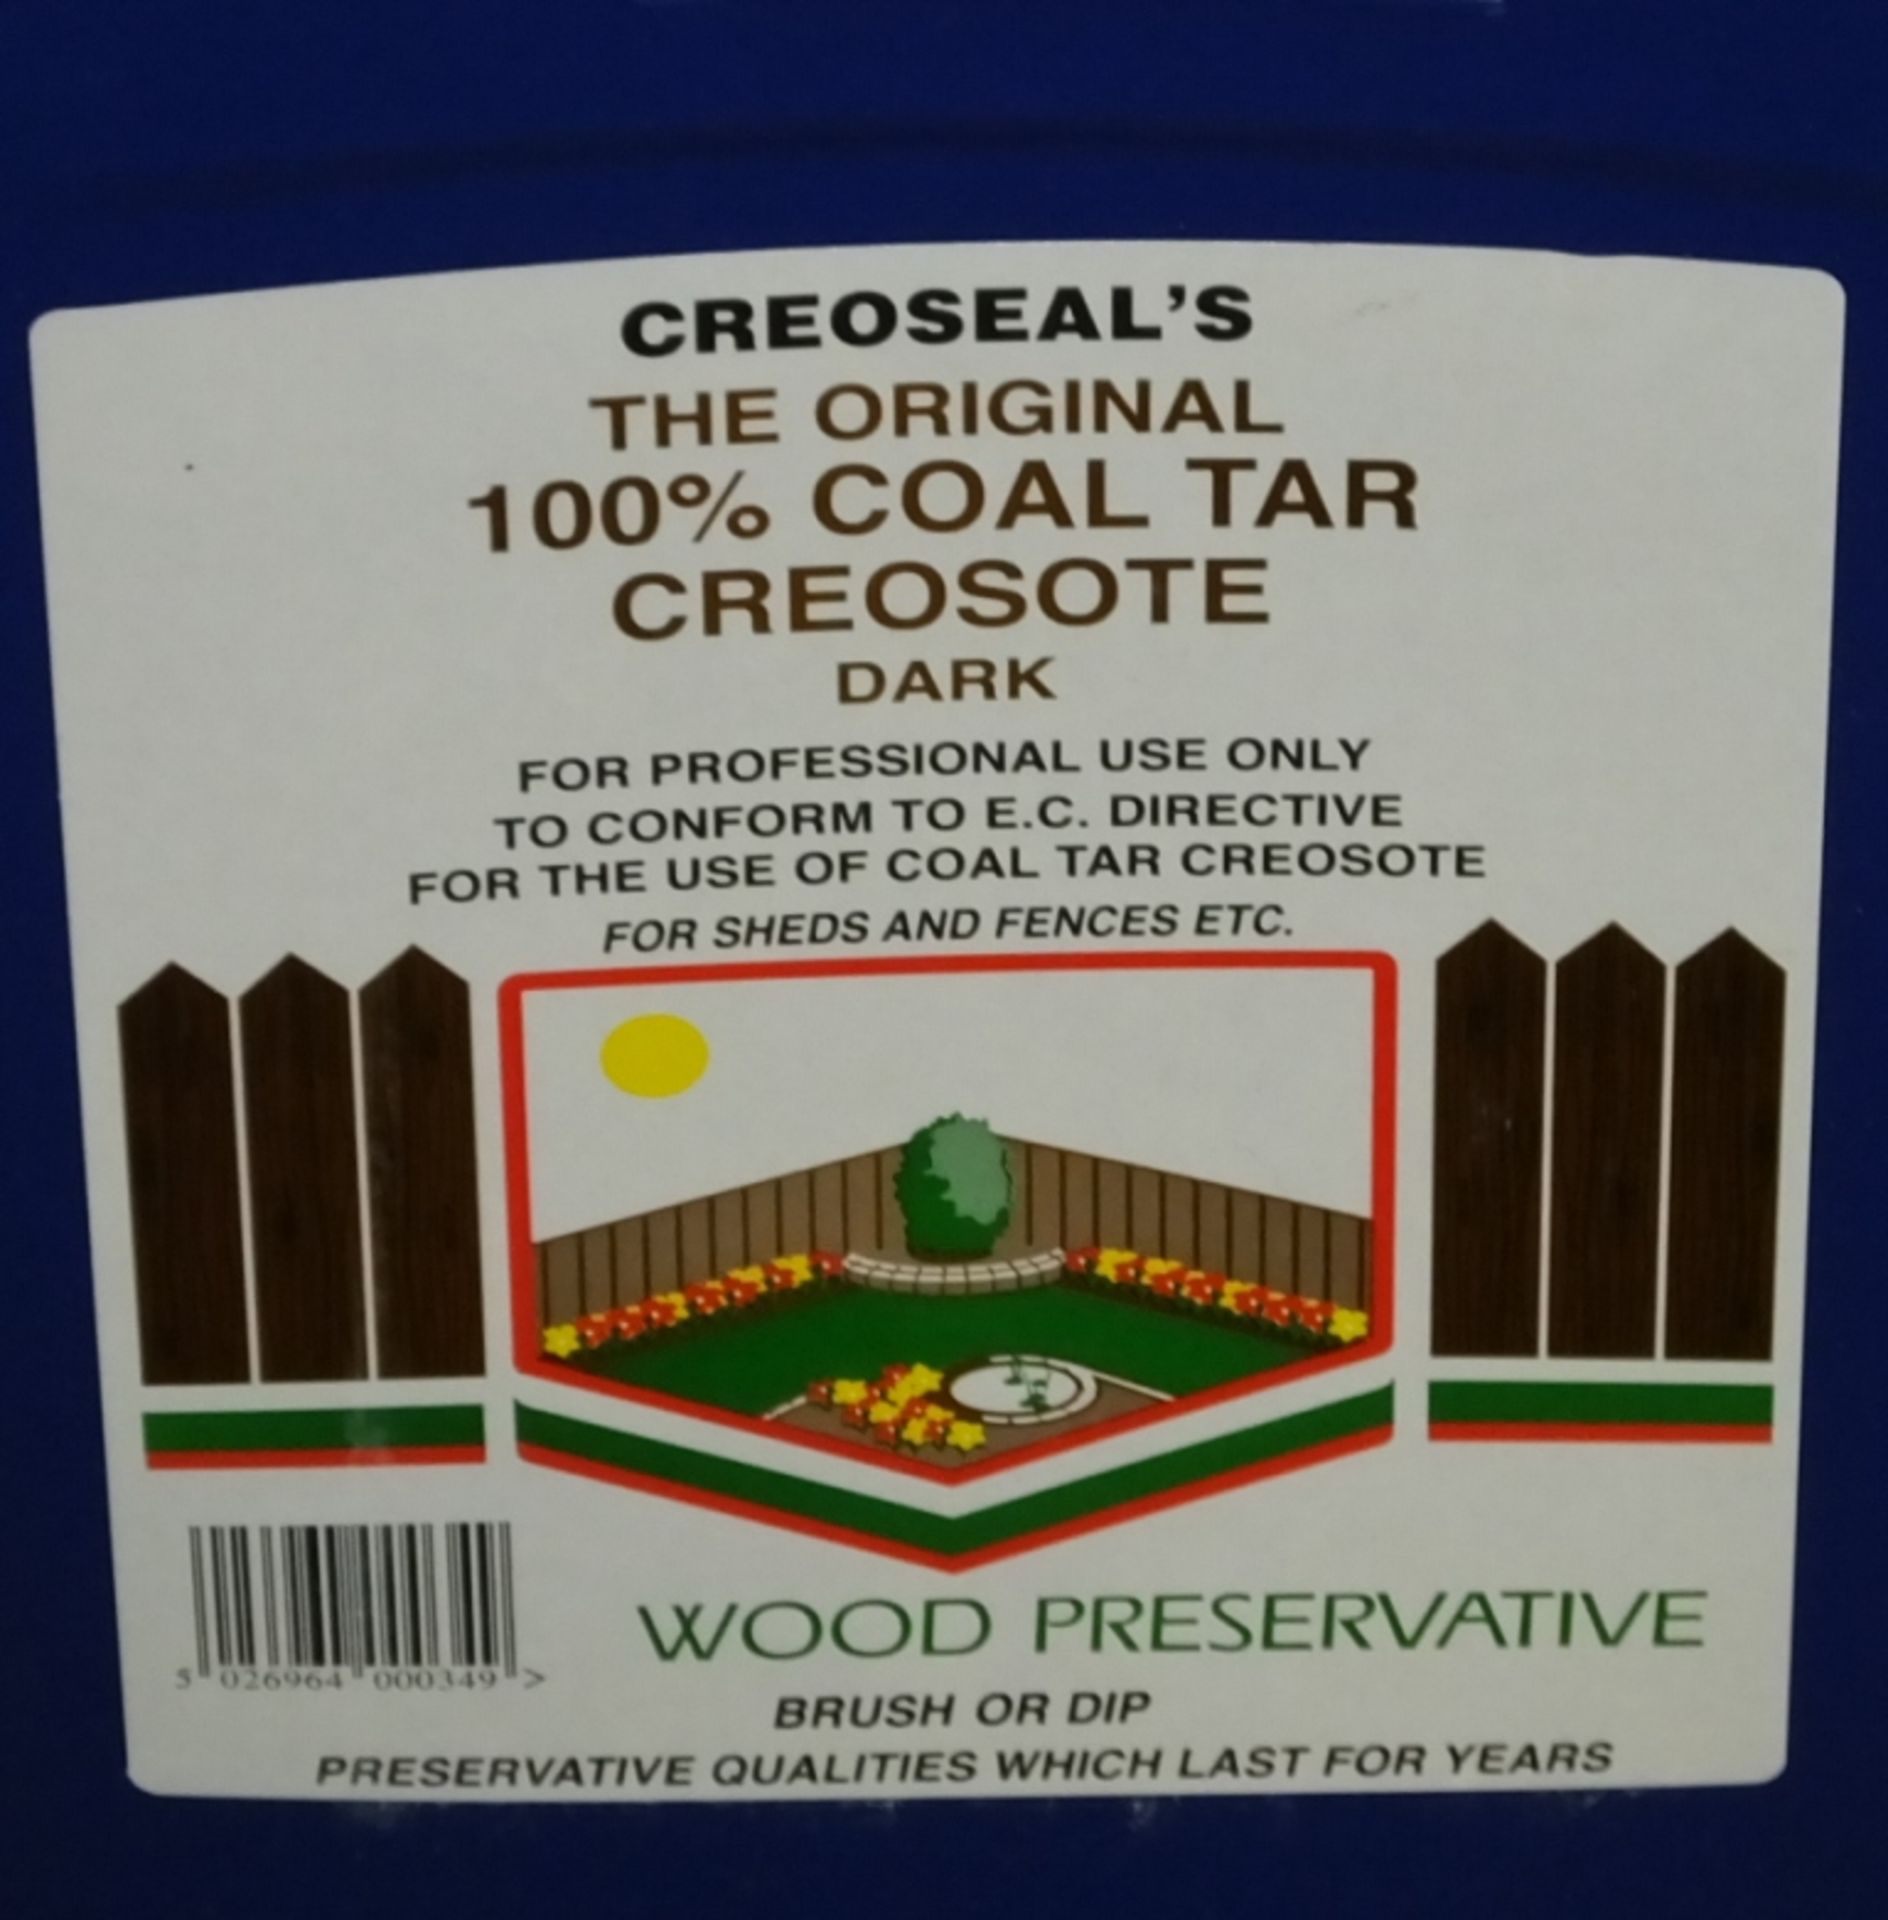 Creoseals The Original 100% Coal Tar Creosote - 20ltr - 3 tubs - Image 2 of 2